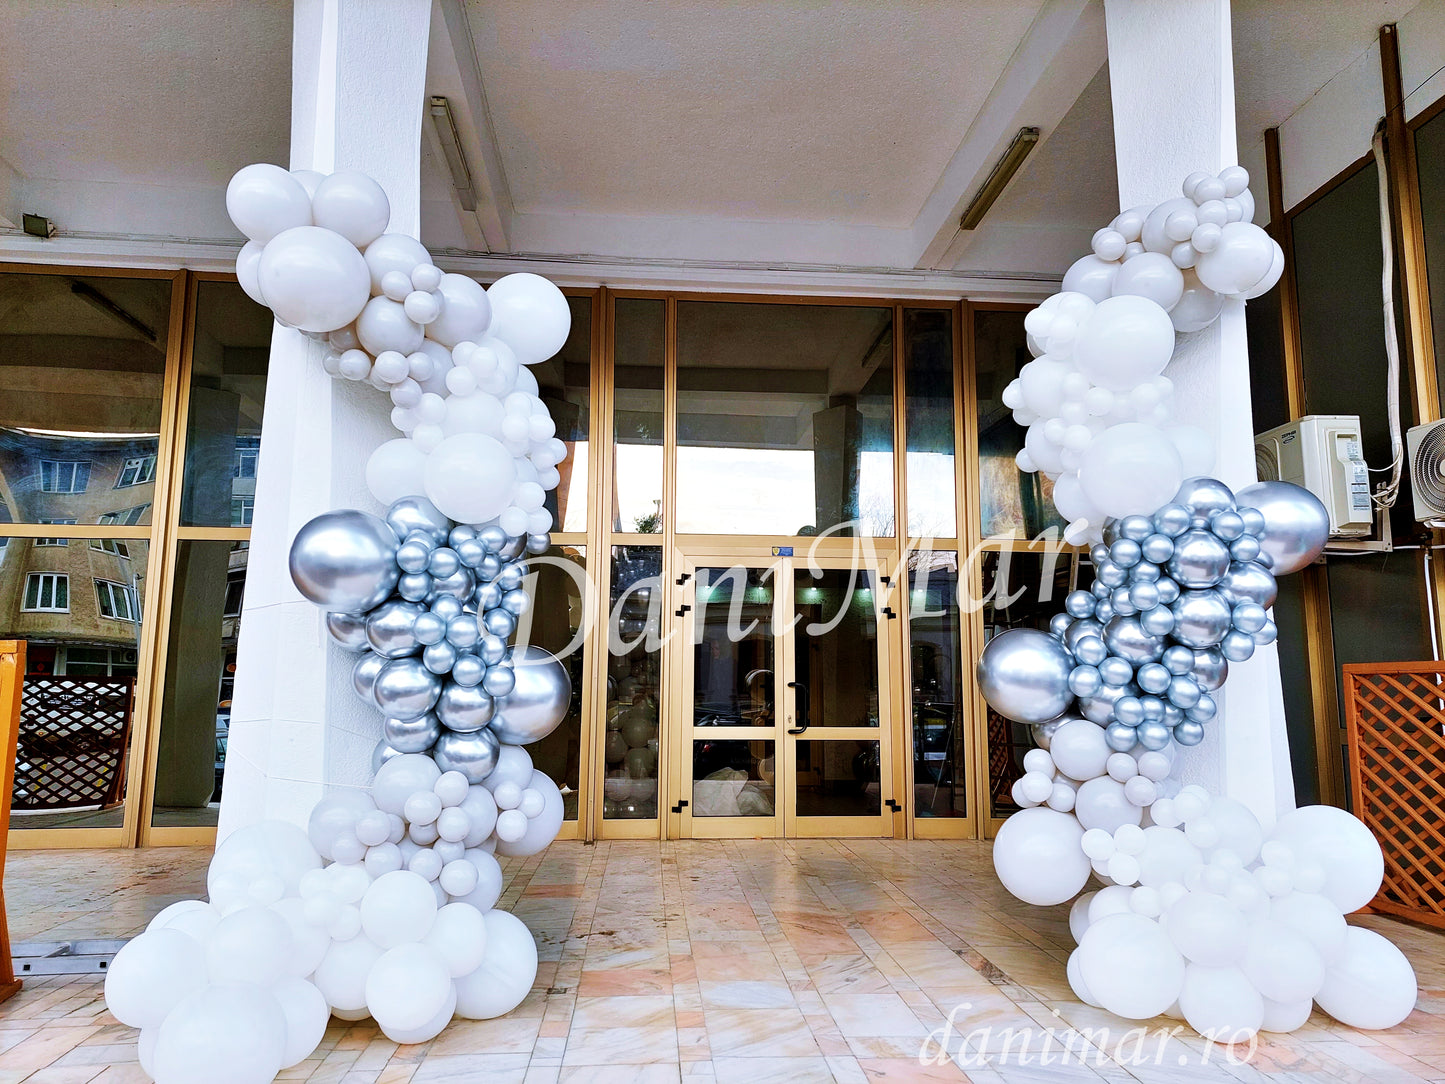 Arcada / Coloane din baloane pentru deschidere / inaugurare restaurant